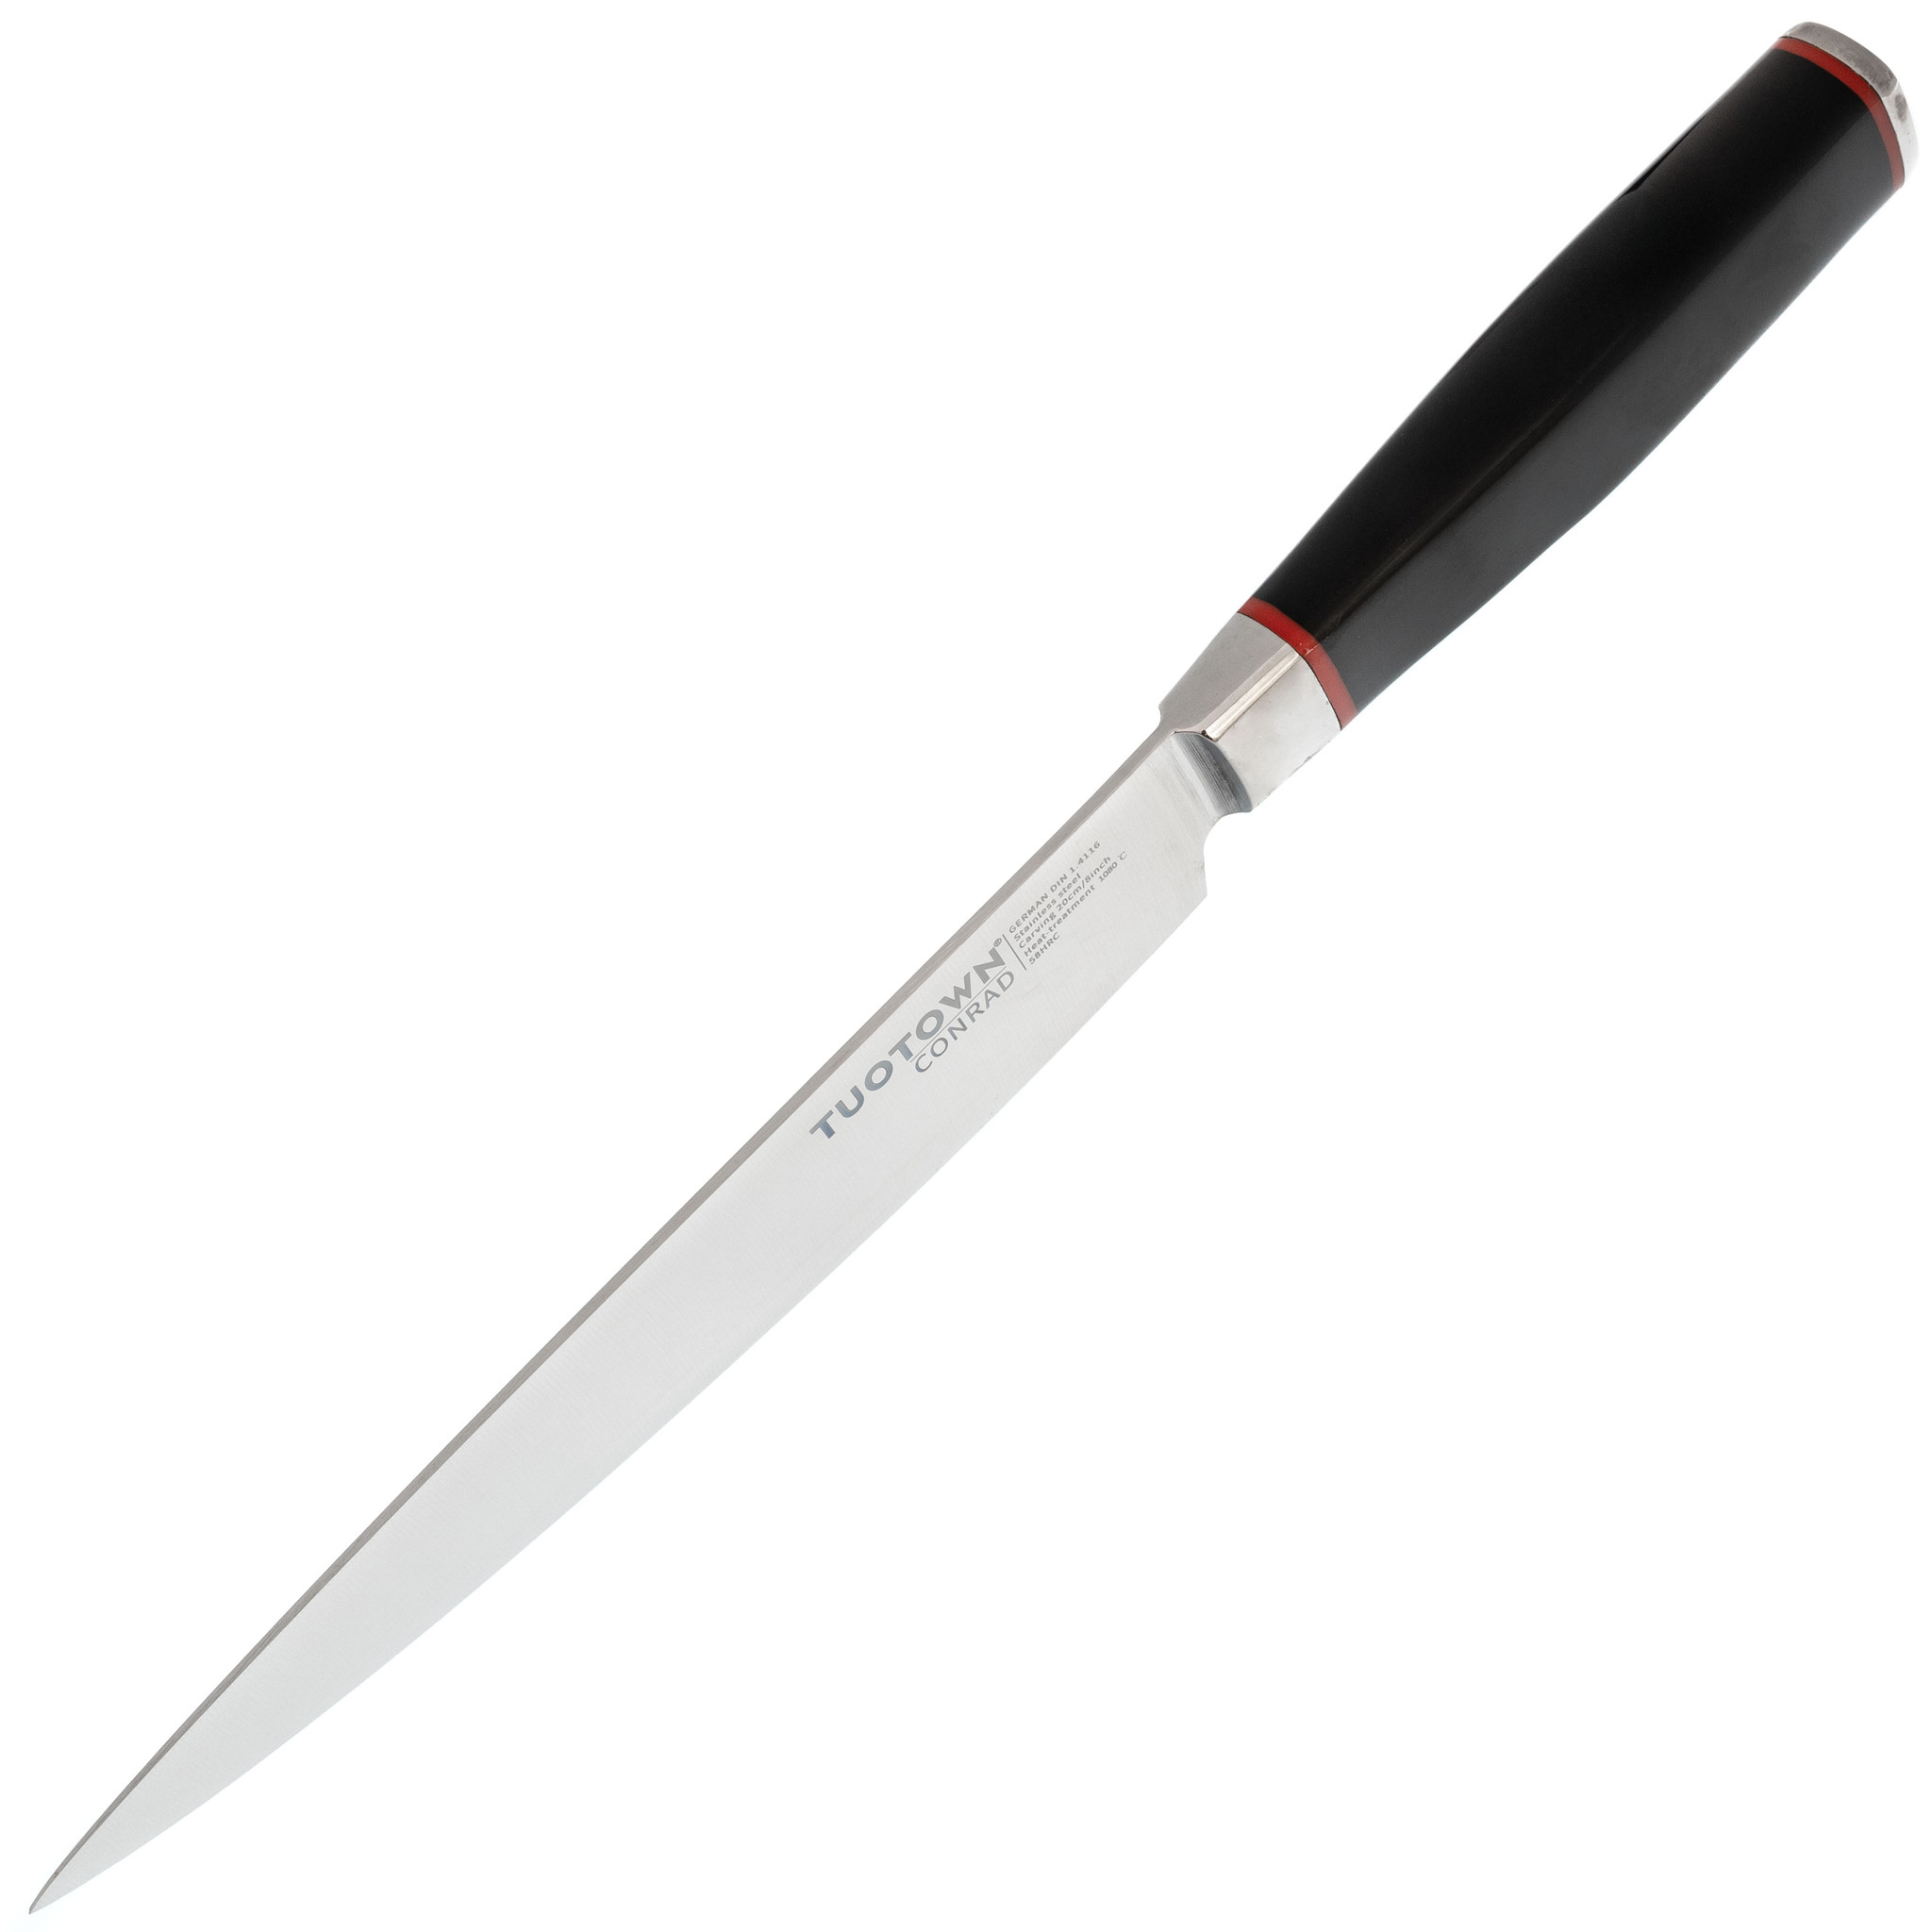 Кухонный нож для нарезки Tuotown, серия CONRAD, сталь 1.4116 - фото 2